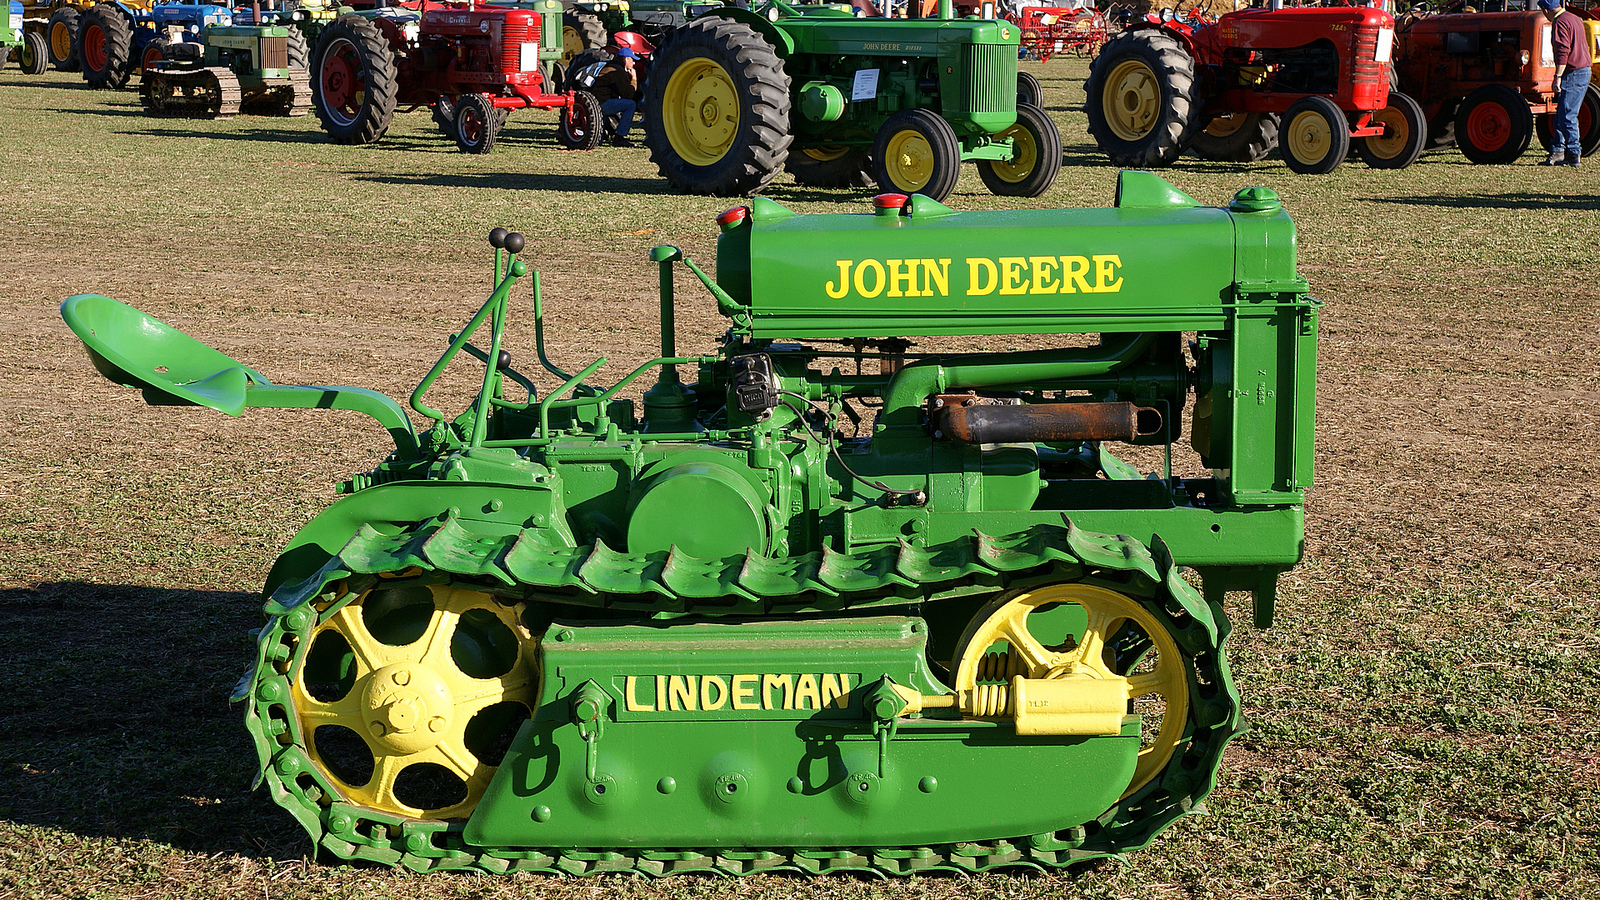 1945 John Deere Lindeman Crawler. | Flickr - Photo Sharing!